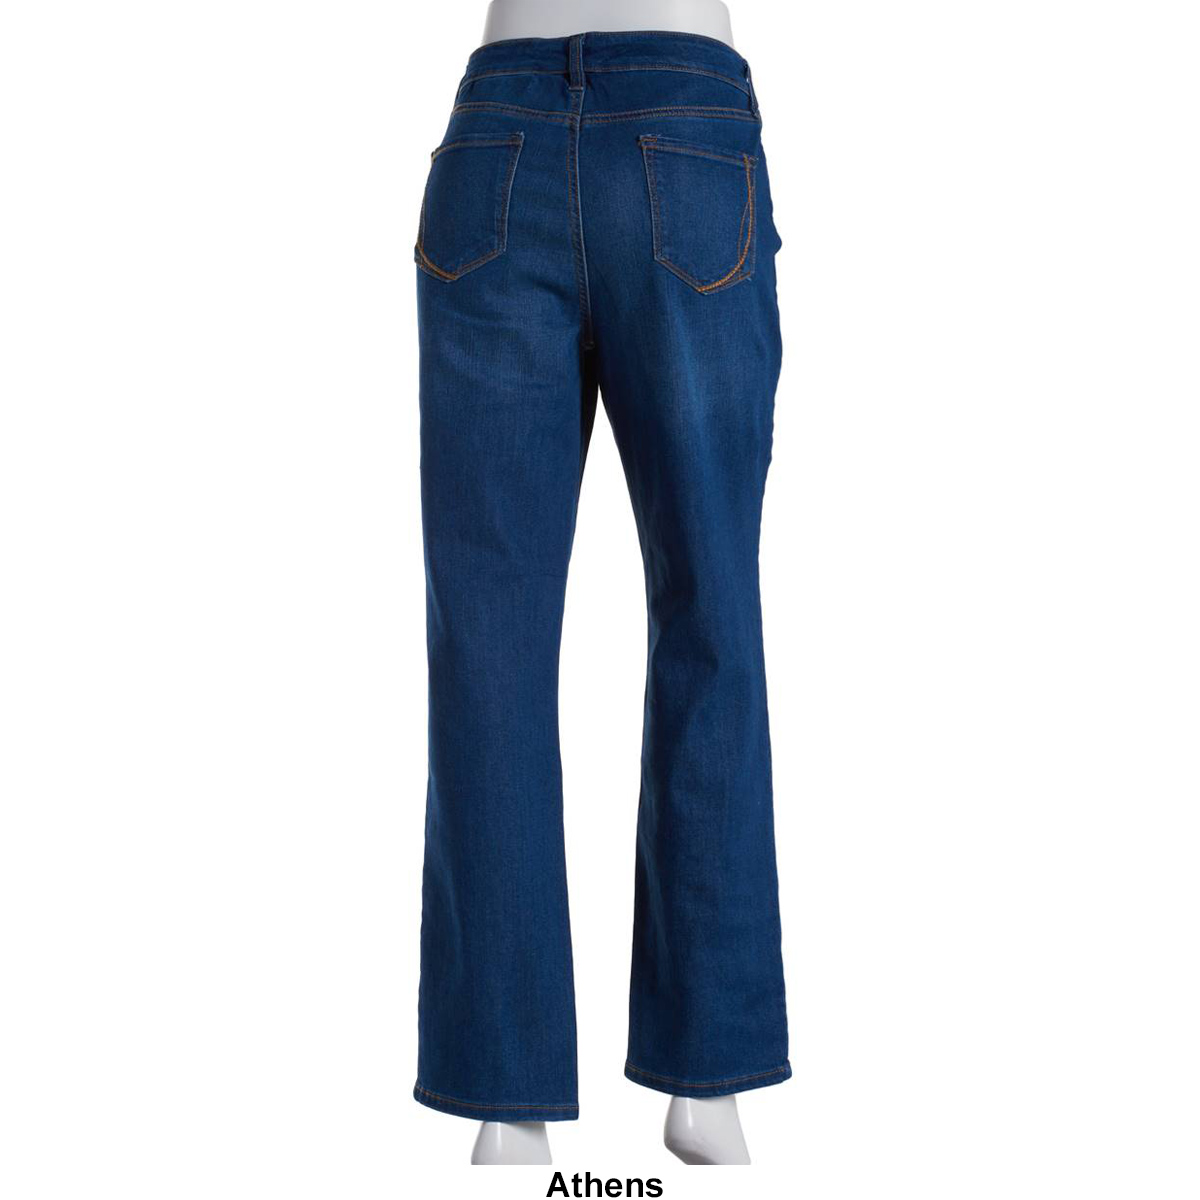 Petite Bandolino Mandie Jeans - Average